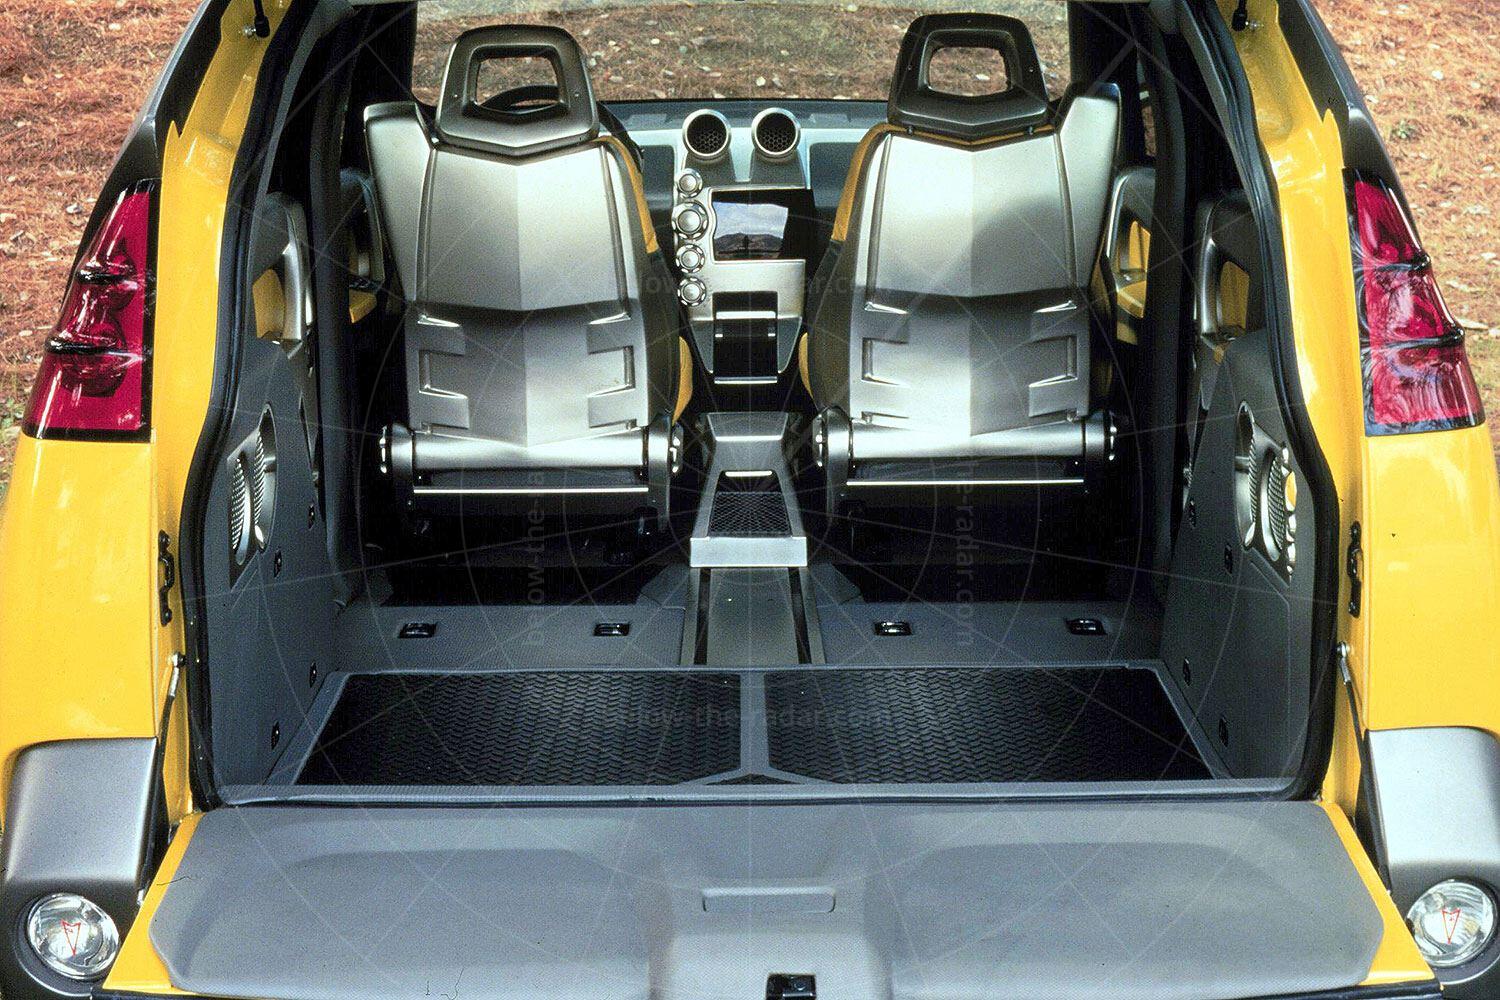 Pontiac Aztek concept - interior Pic: General Motors | Pontiac Aztek concept - interior